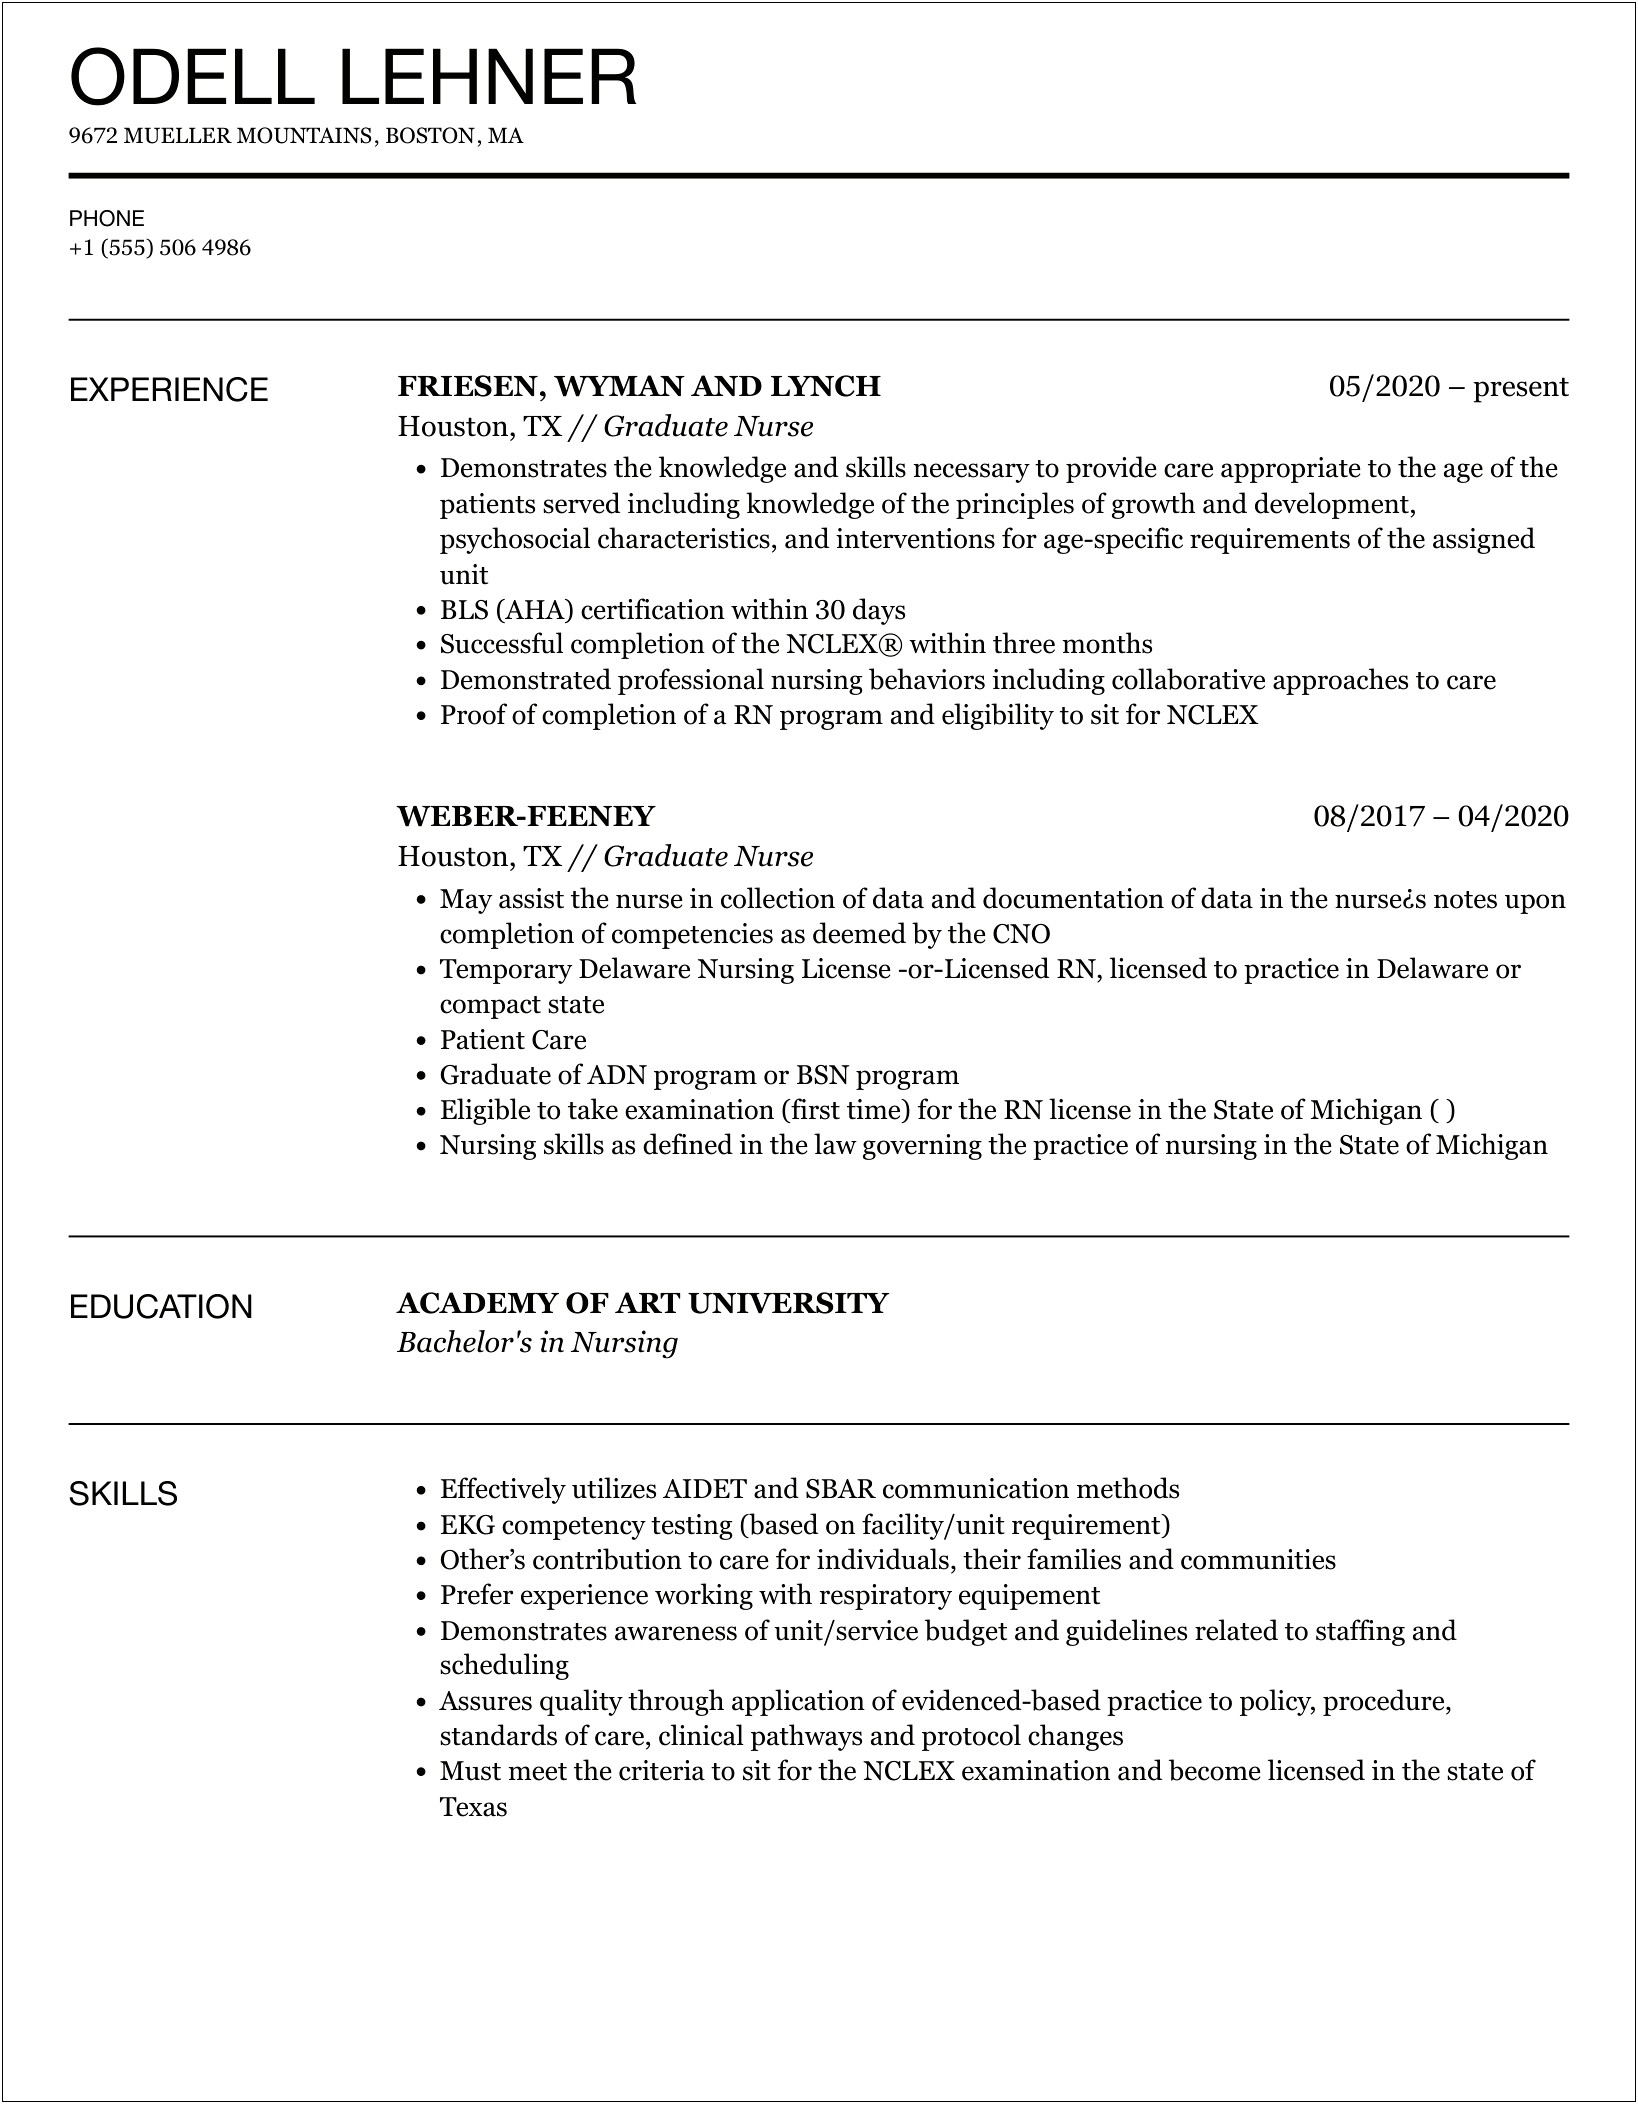 Resume Summary Statement For Nurse Residency Program